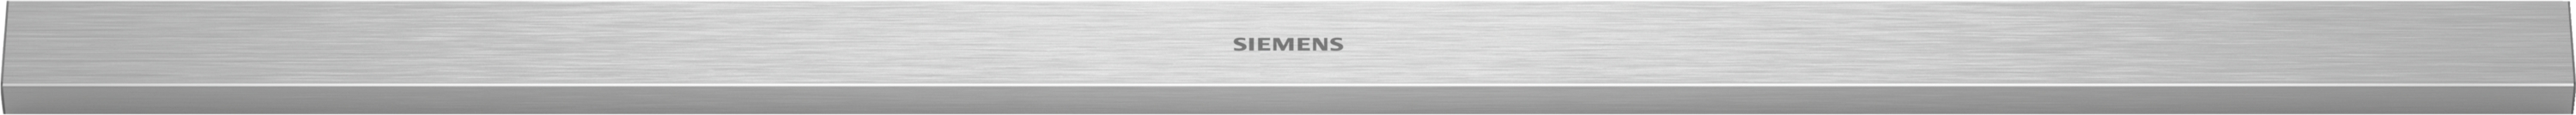 Siemens LZ49551 Dekorační lišta